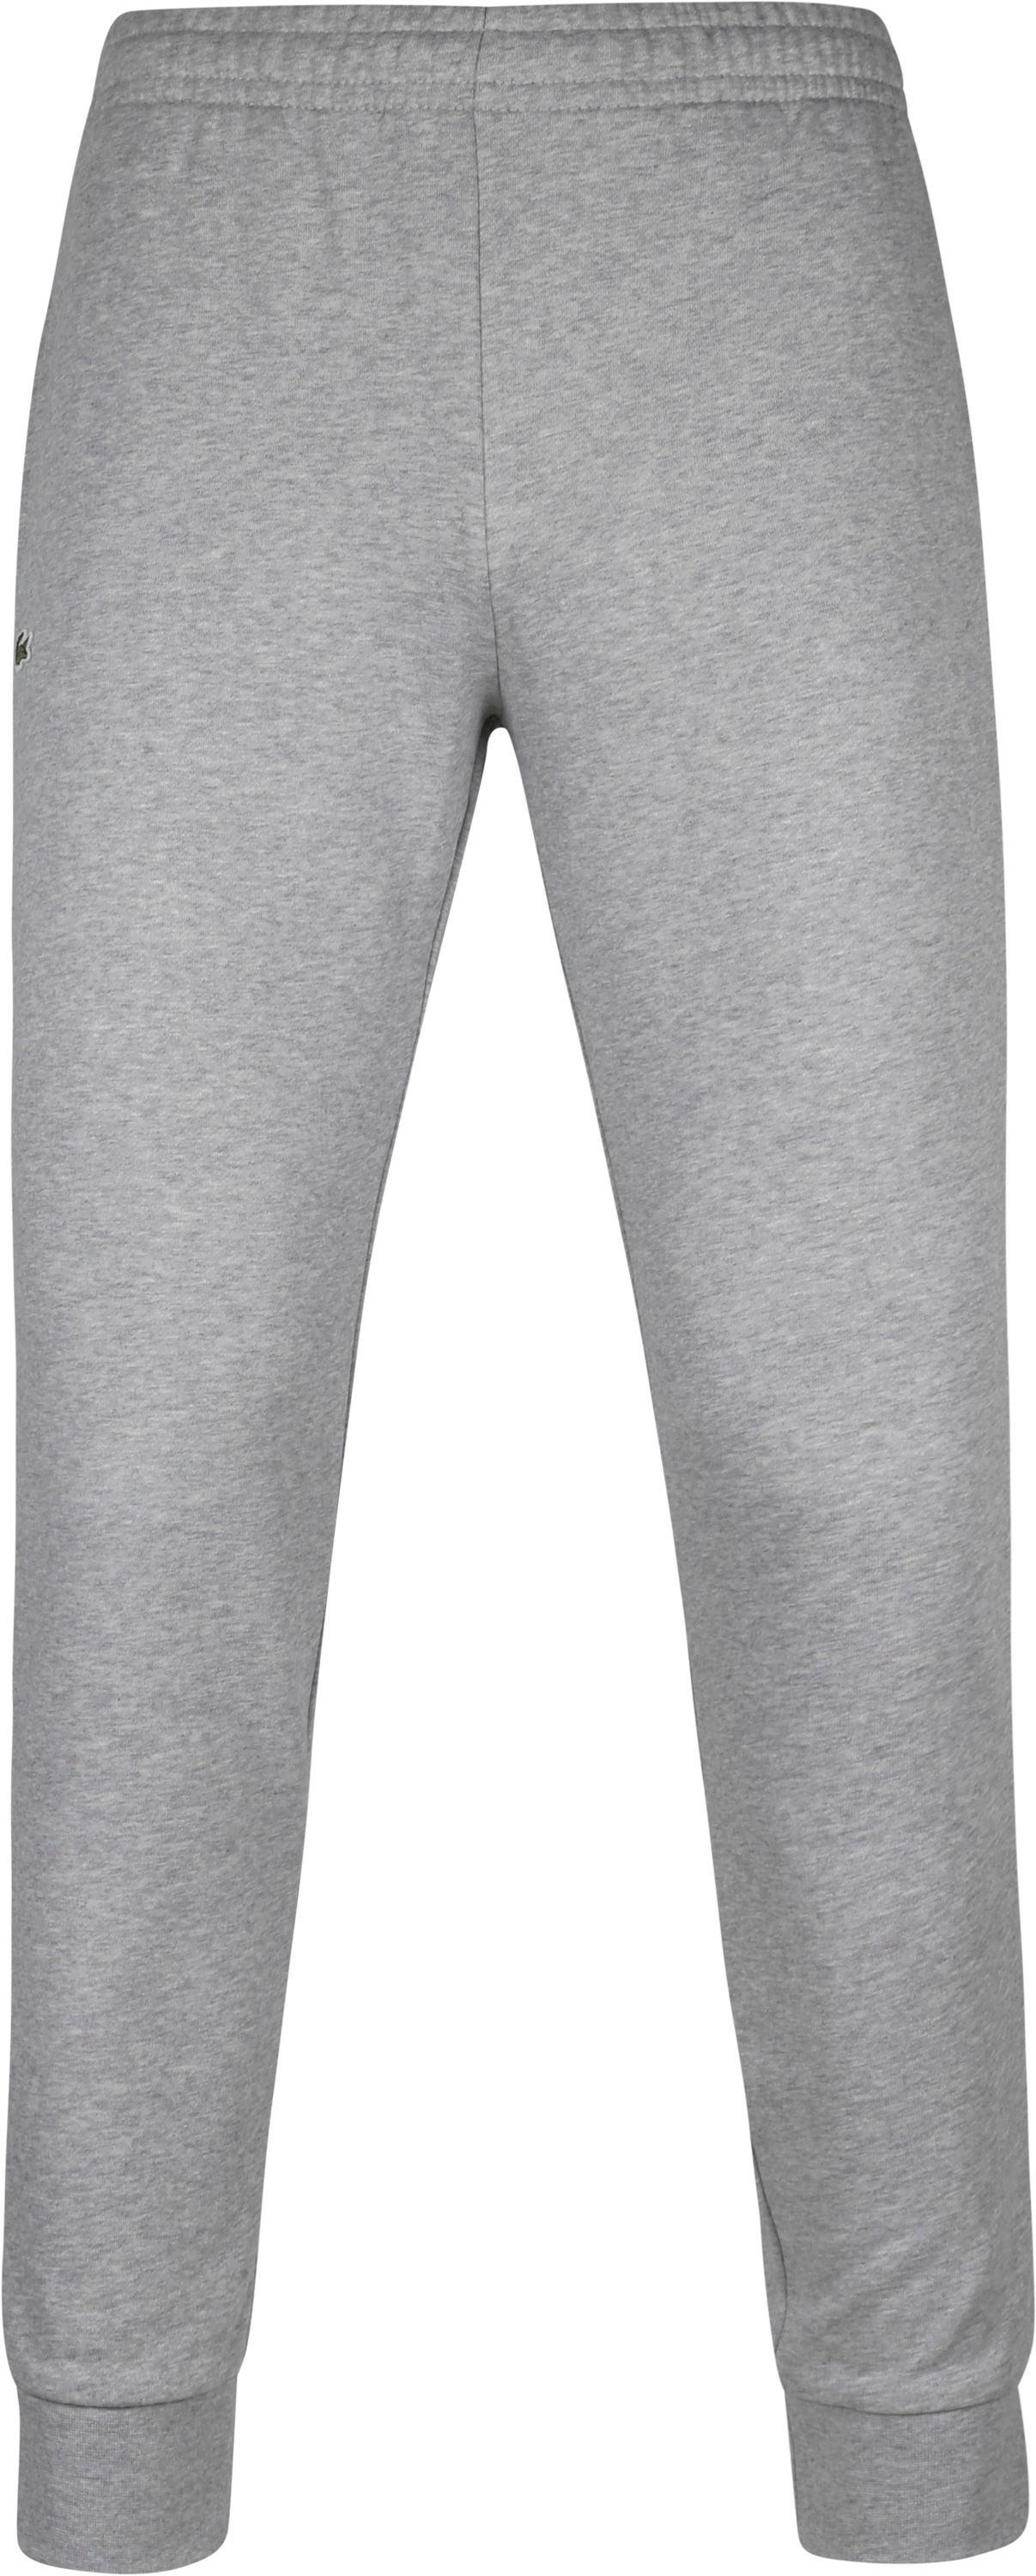 Lacoste Light Gray Sweatpants Grey size L